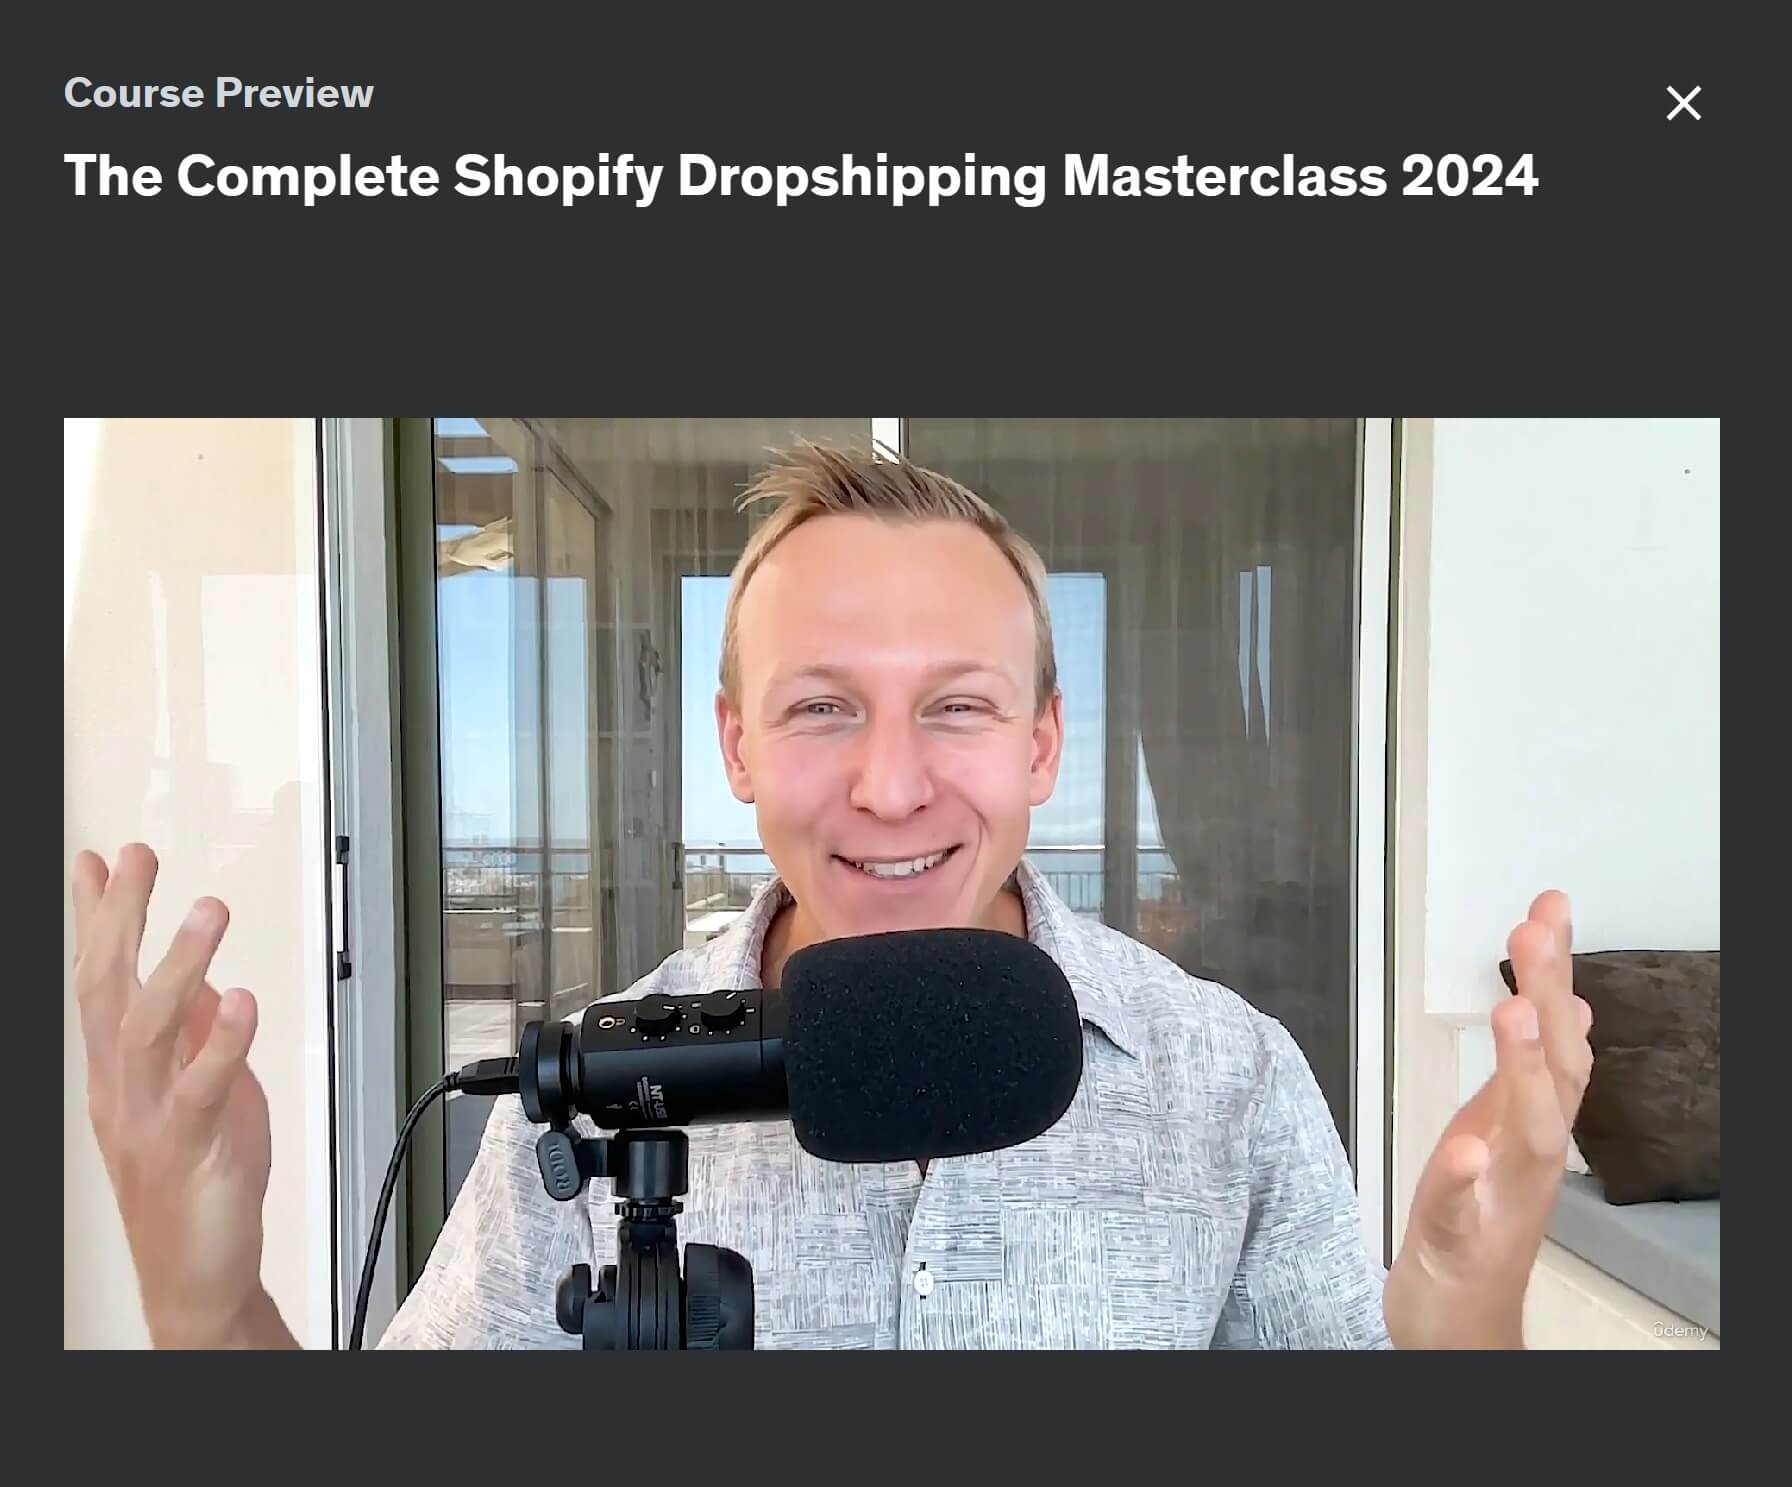 L'aperçu complet de la Masterclass Shopify Dropshipping 2024